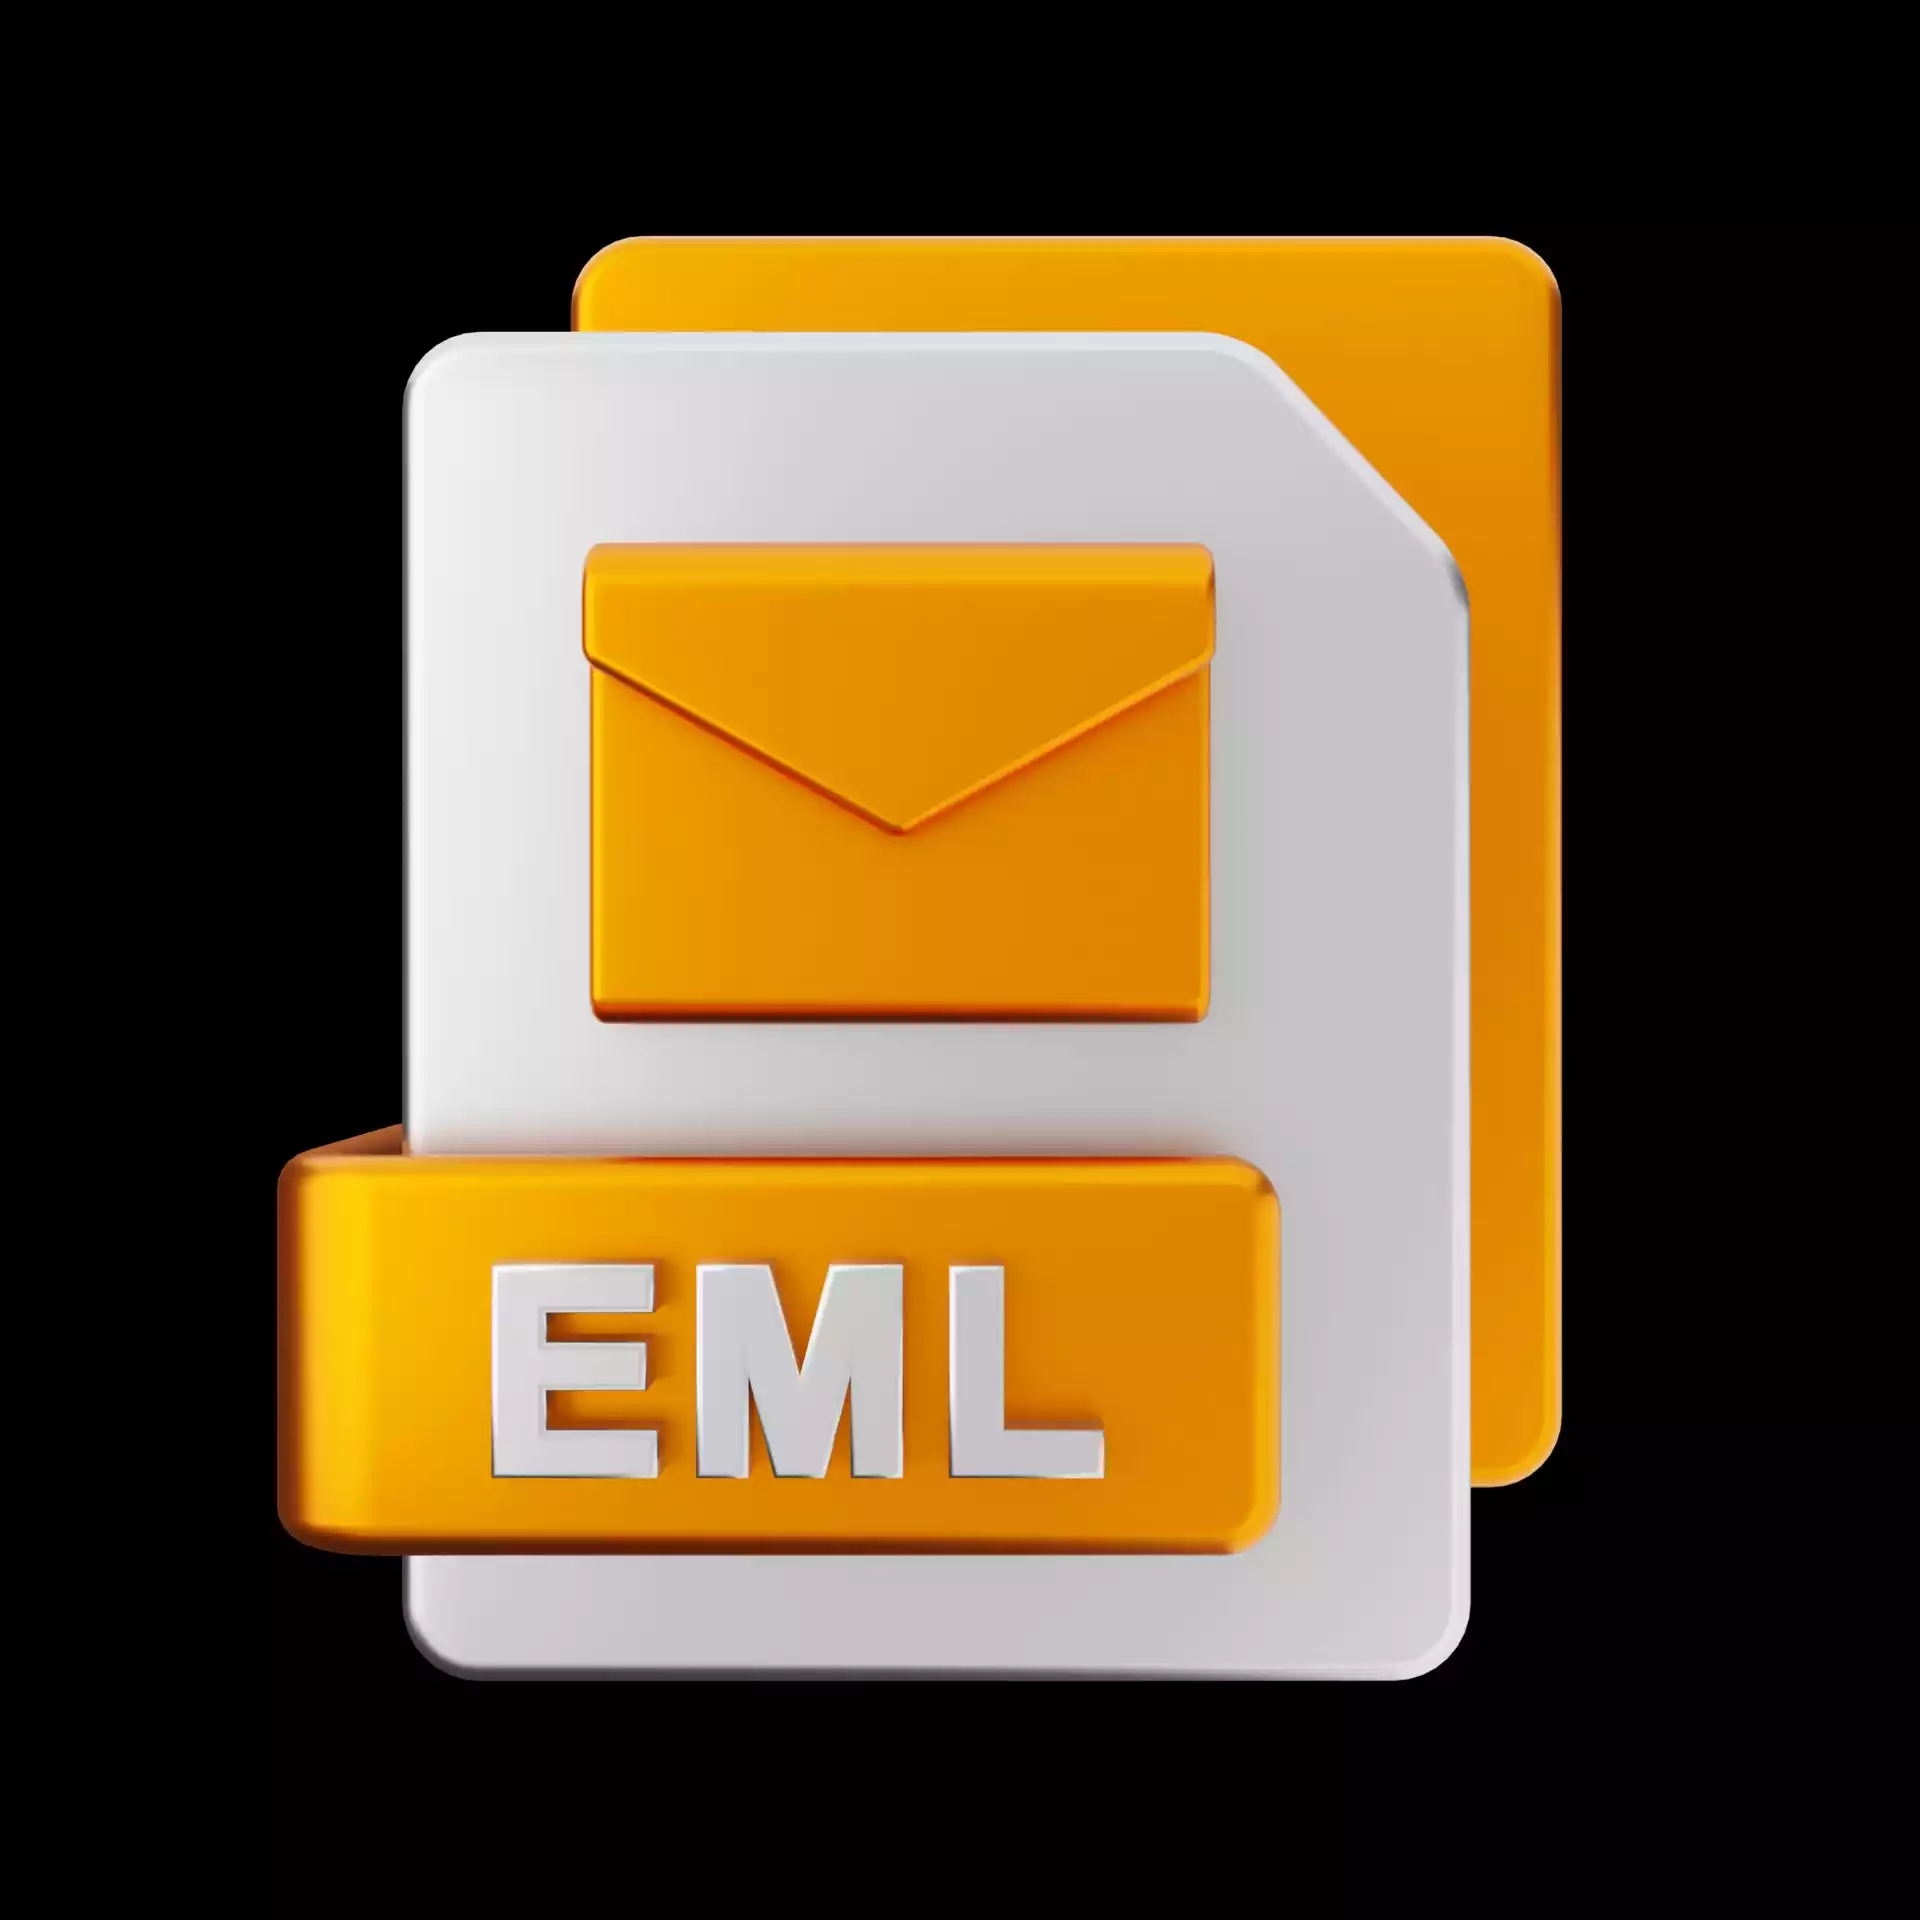 .eml file extension